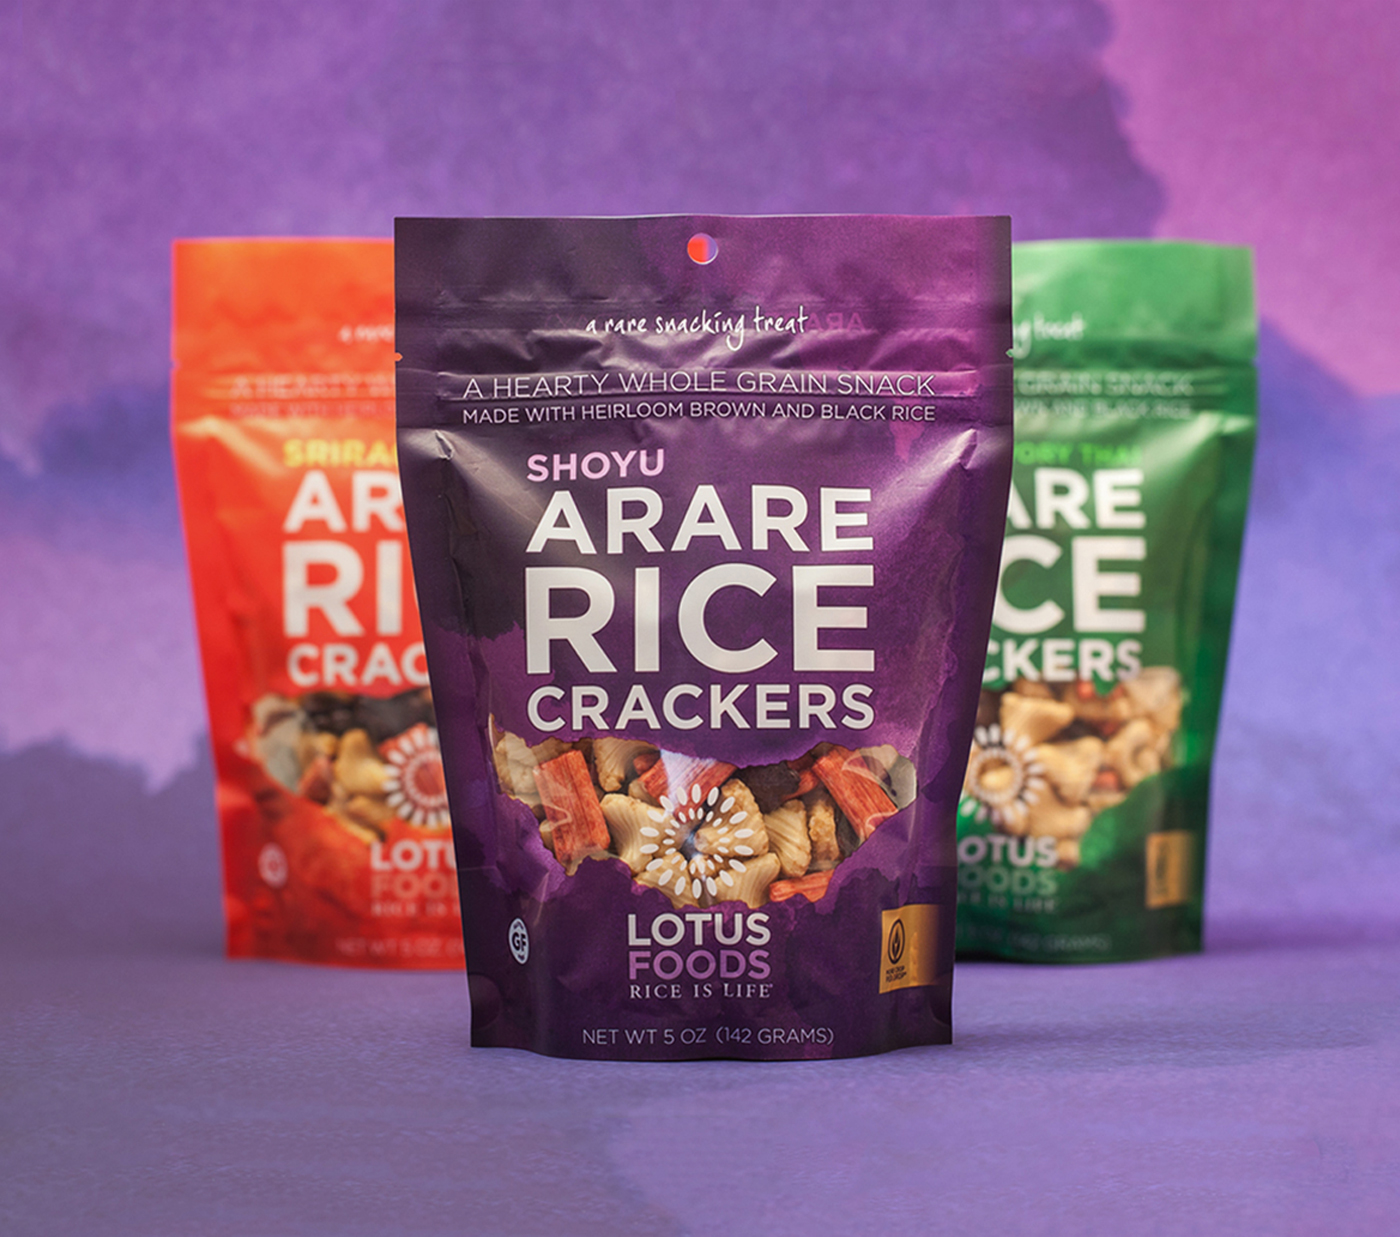 Lotus Foods Arare Rice Crackers Packaging